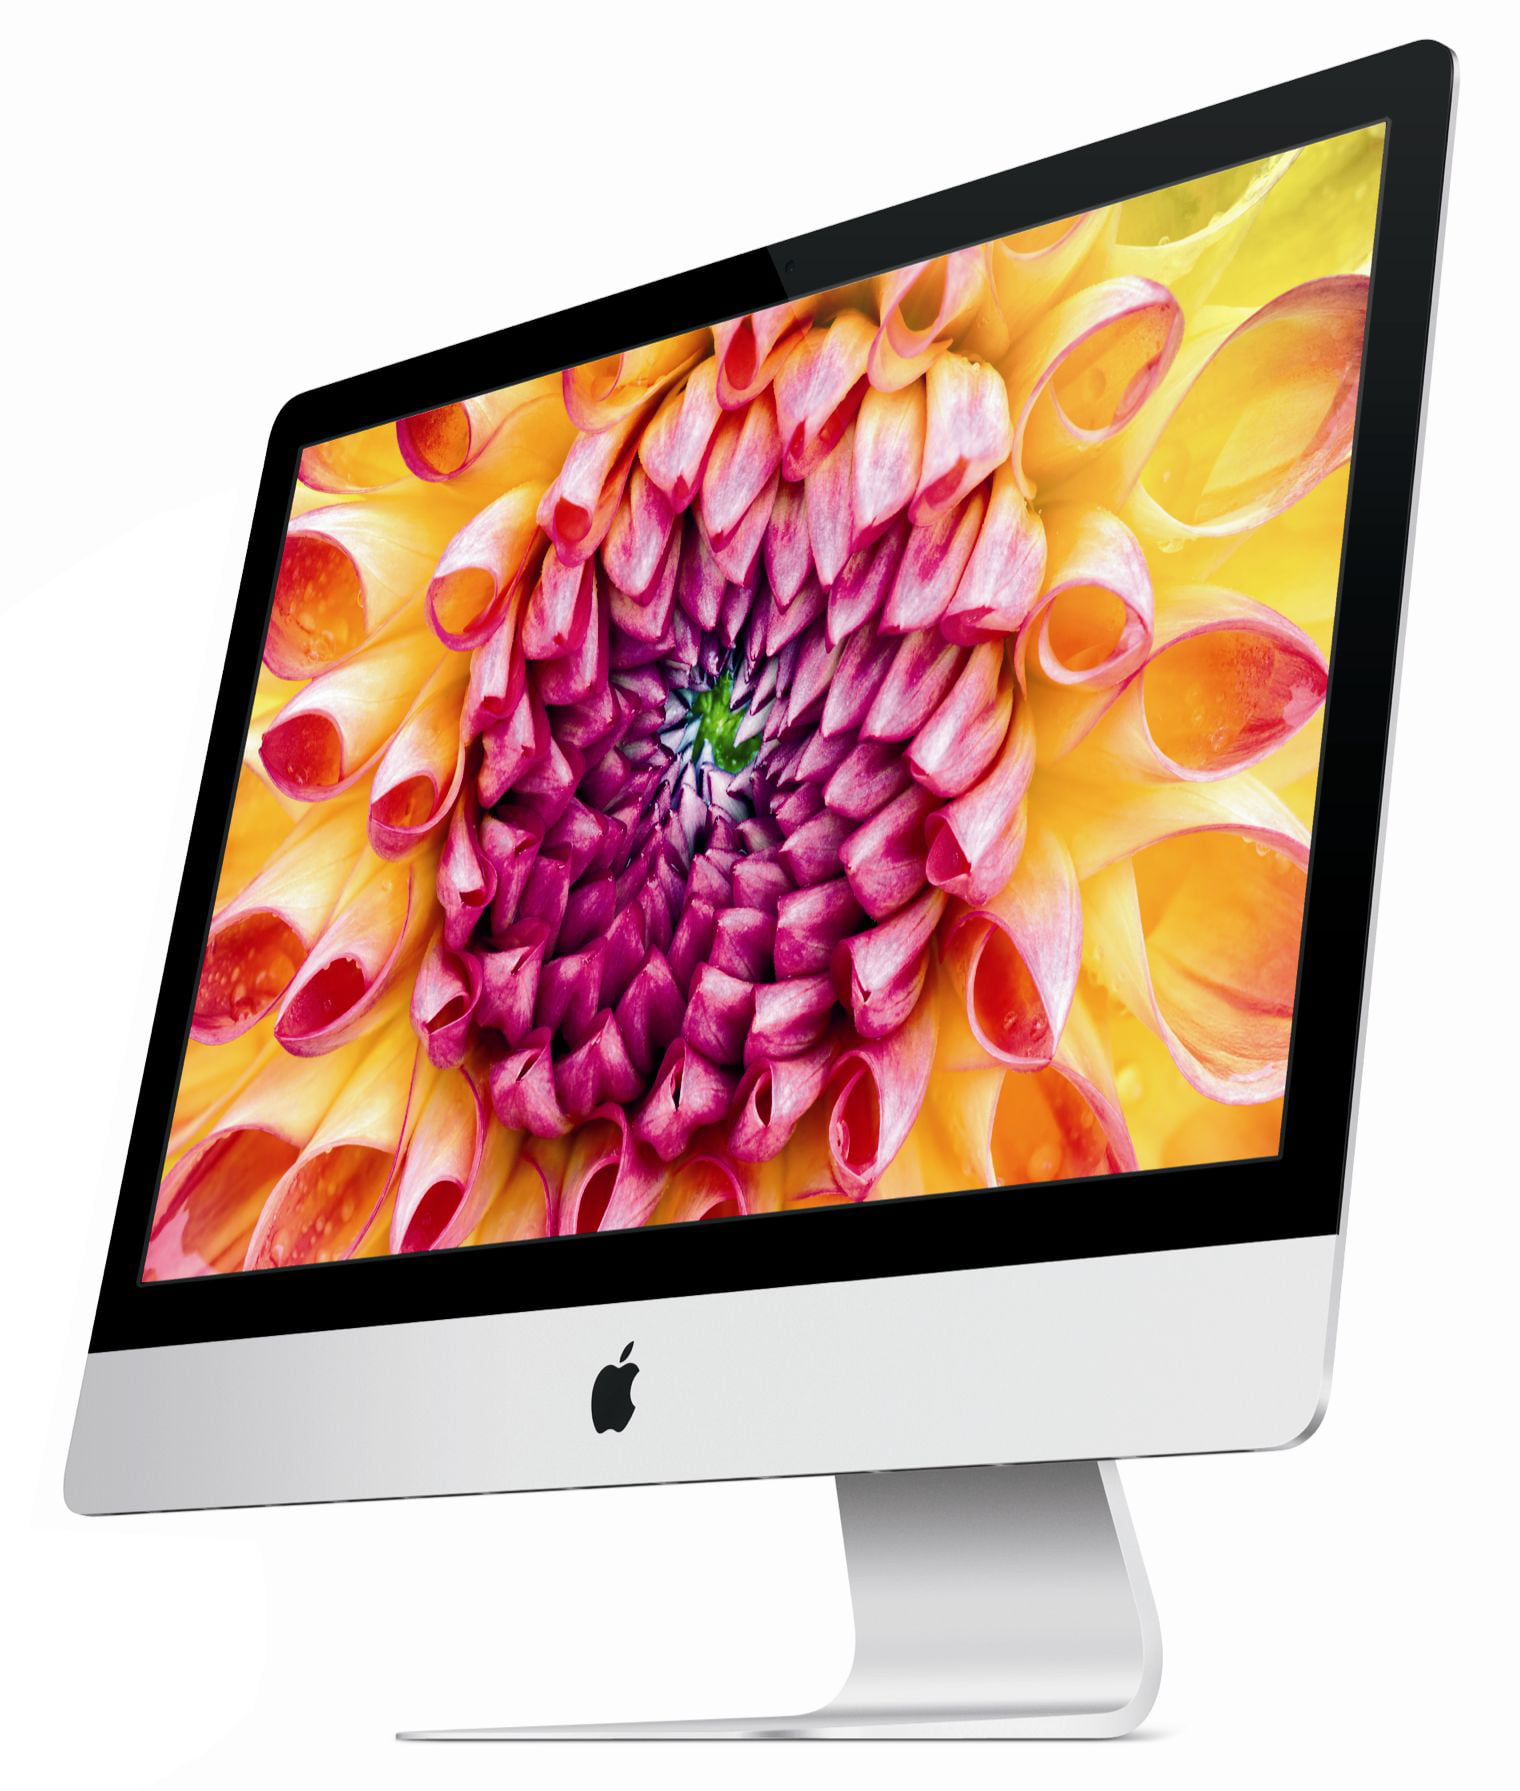 Refurbished Apple A Grade Desktop Computer iMac 21.5-inch ...